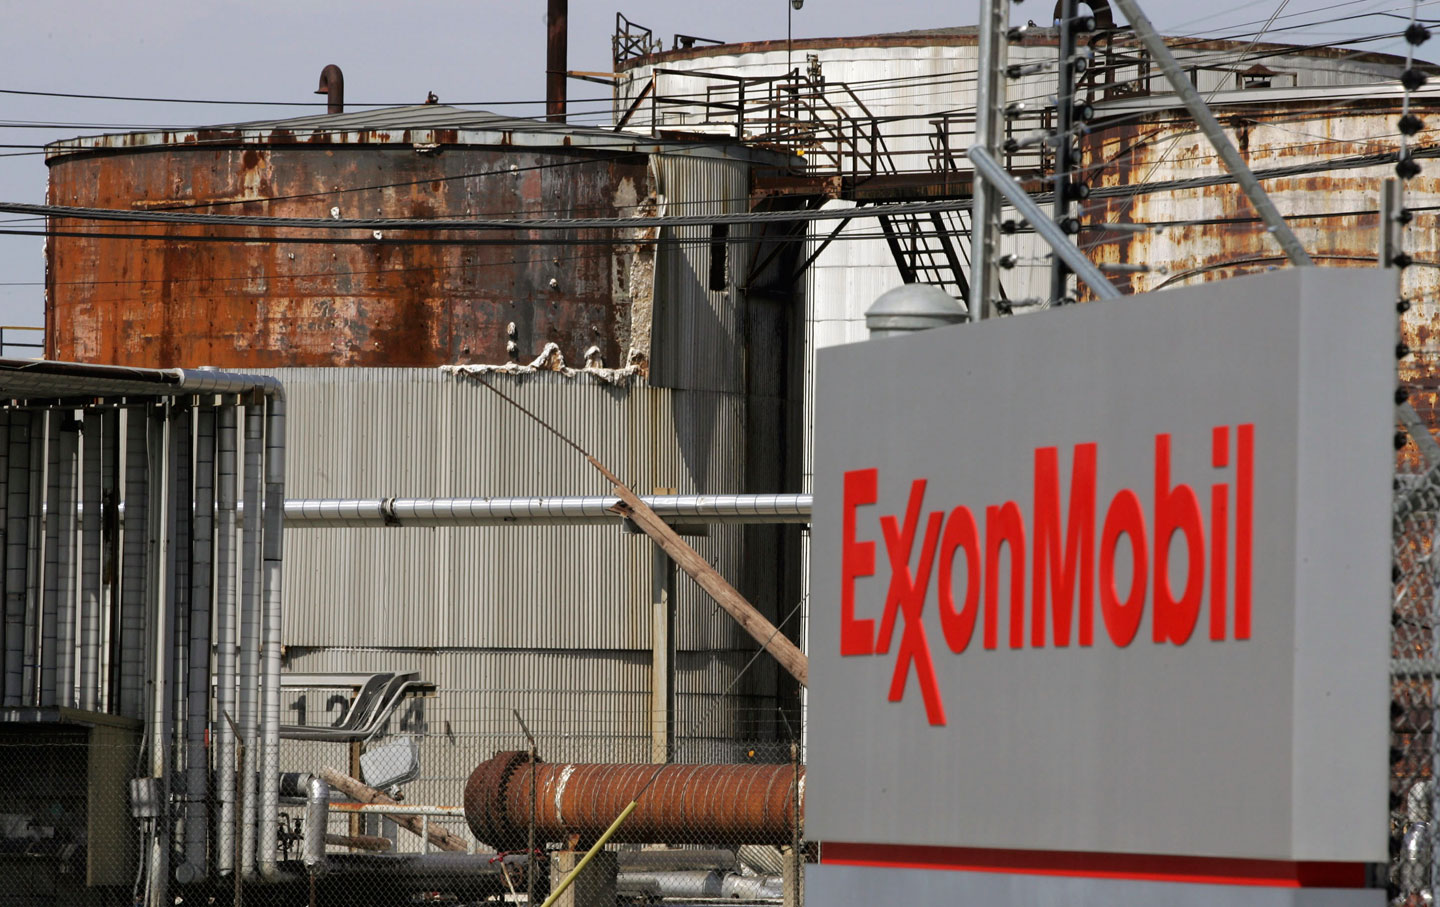 An Exxon Mobil refinery in Baytown, Texas